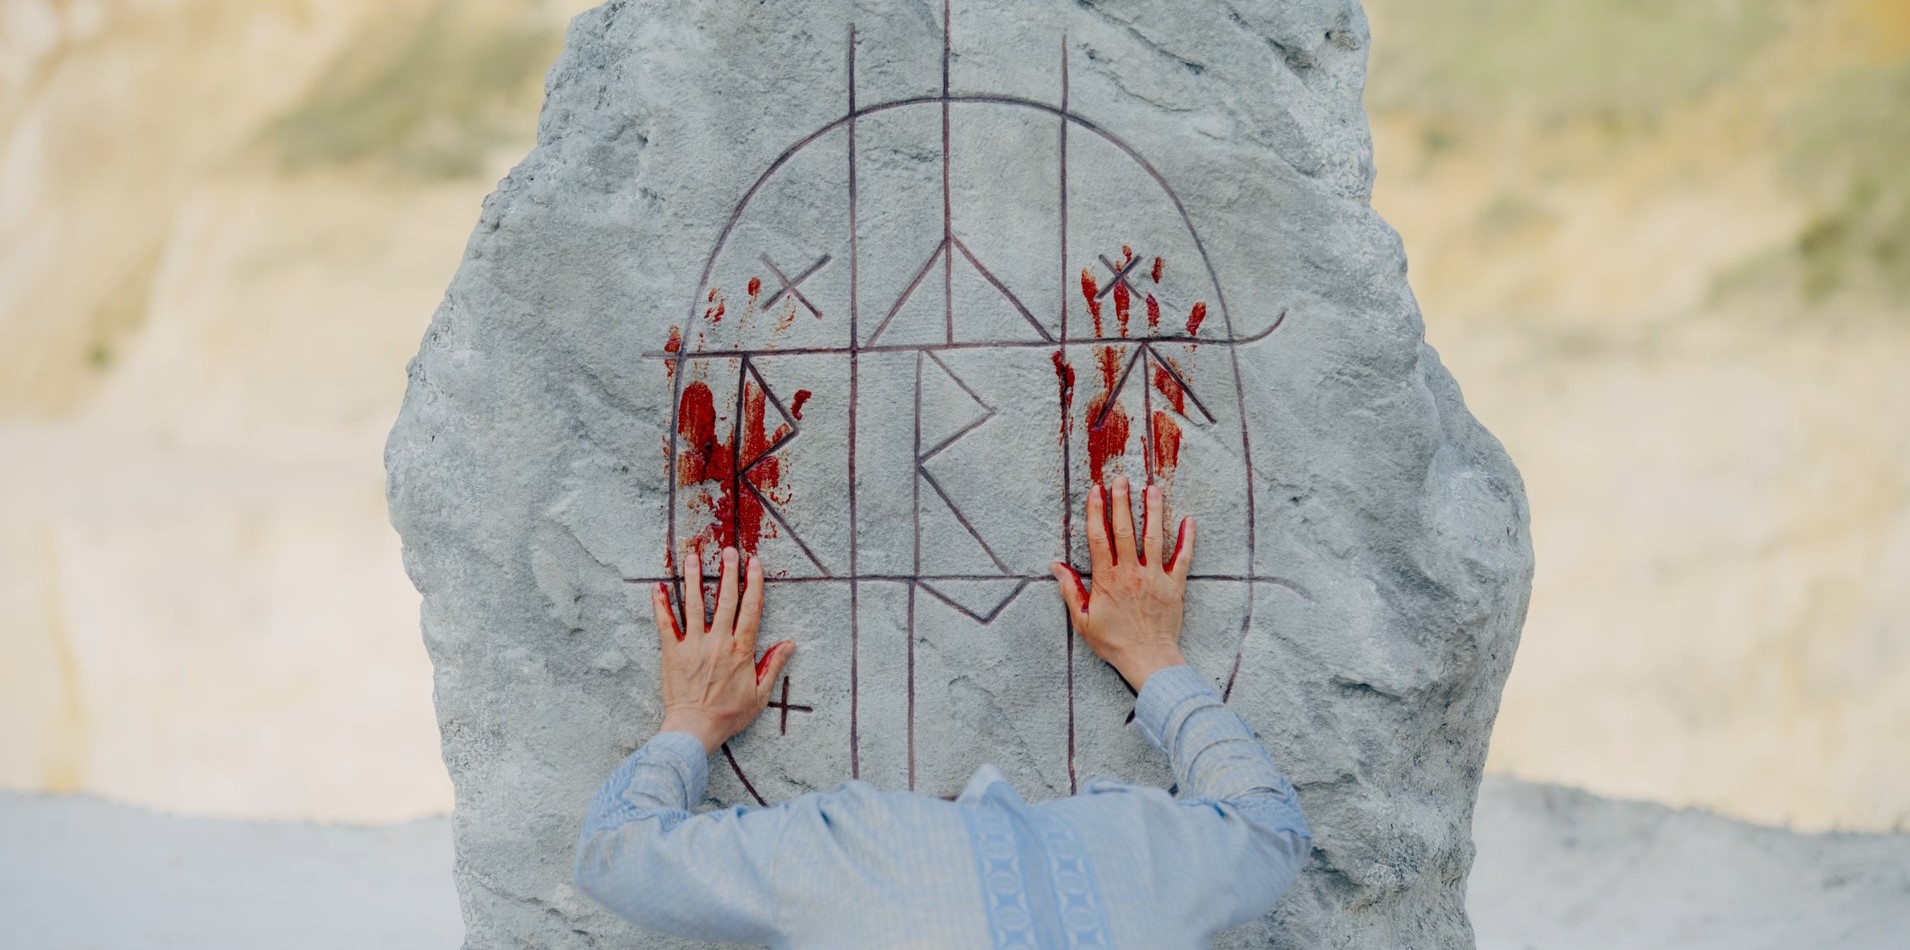 Ari Aster's 'Midsommar' drags pagan folk horror into 21st century | CNN Travel